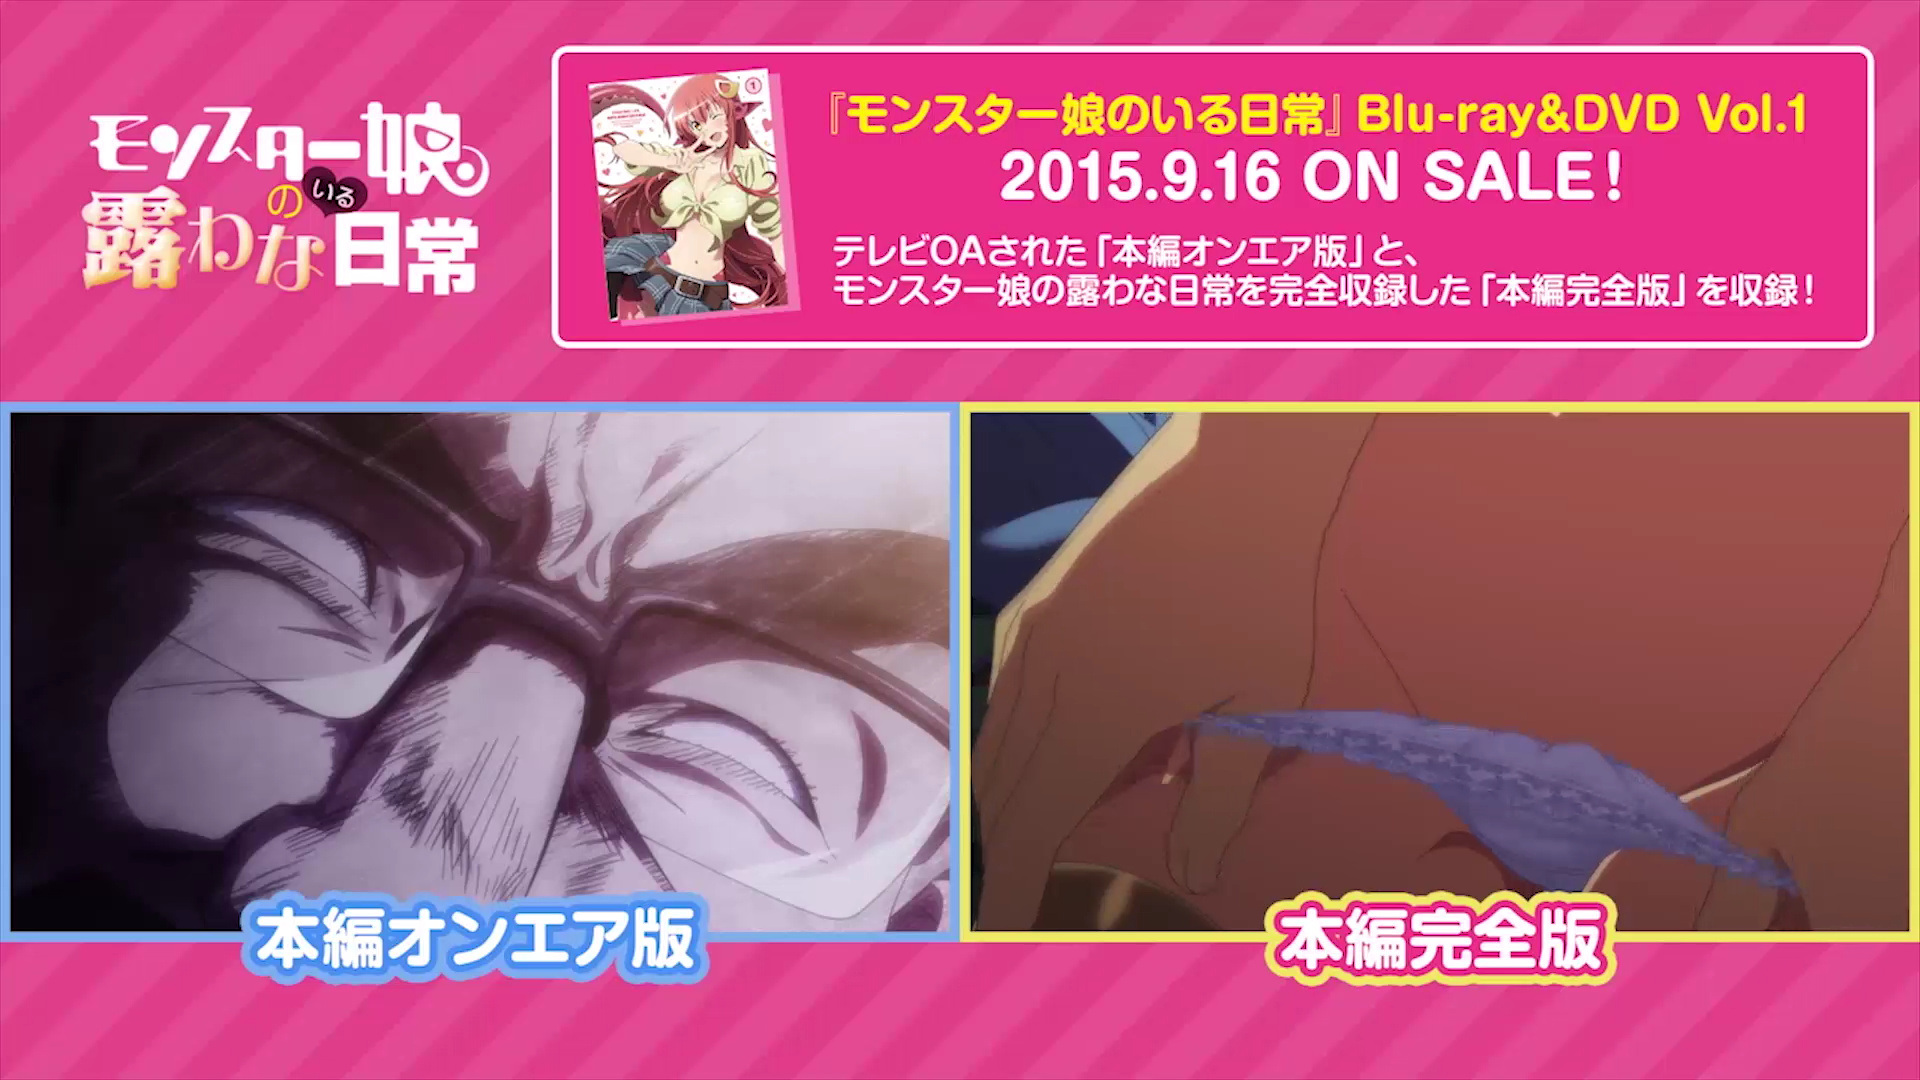 TV vs Blu-Ray Monster Musume anime blu-ray volume 1 uncensored 20